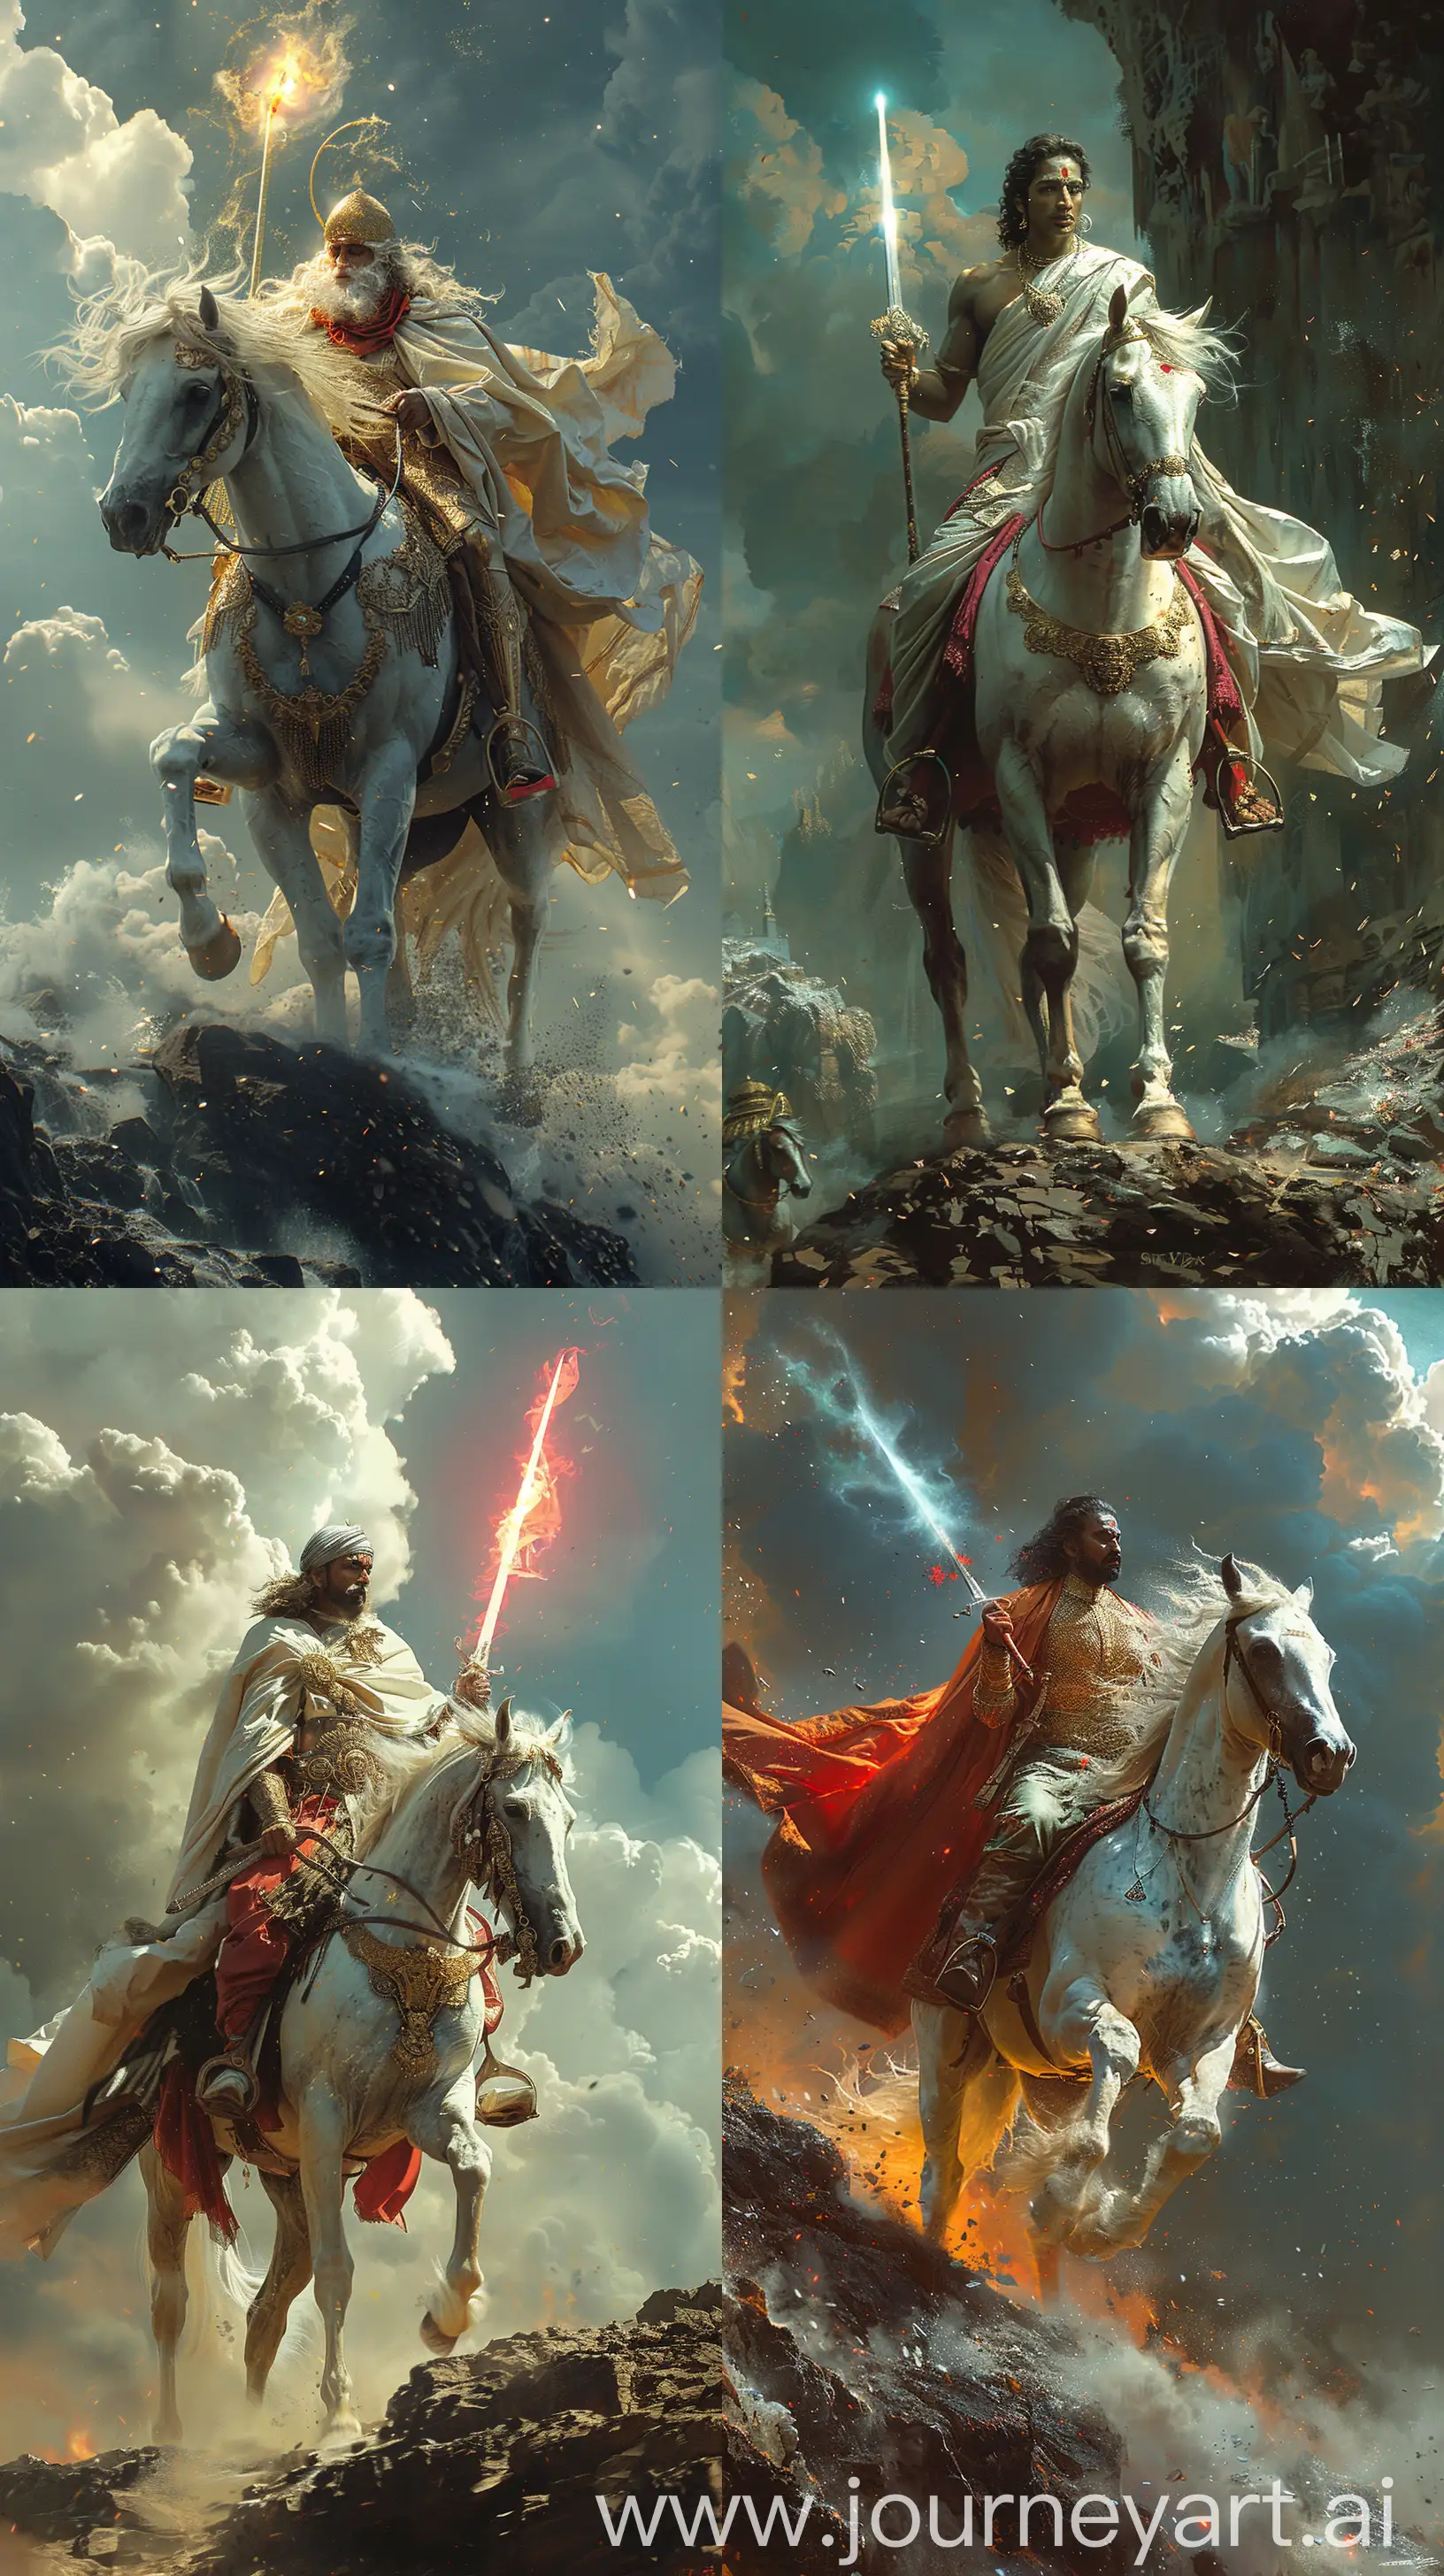 Epic-Fantasy-Art-of-Hindu-God-Kalki-on-Majestic-White-Horse-with-Glowing-Sword